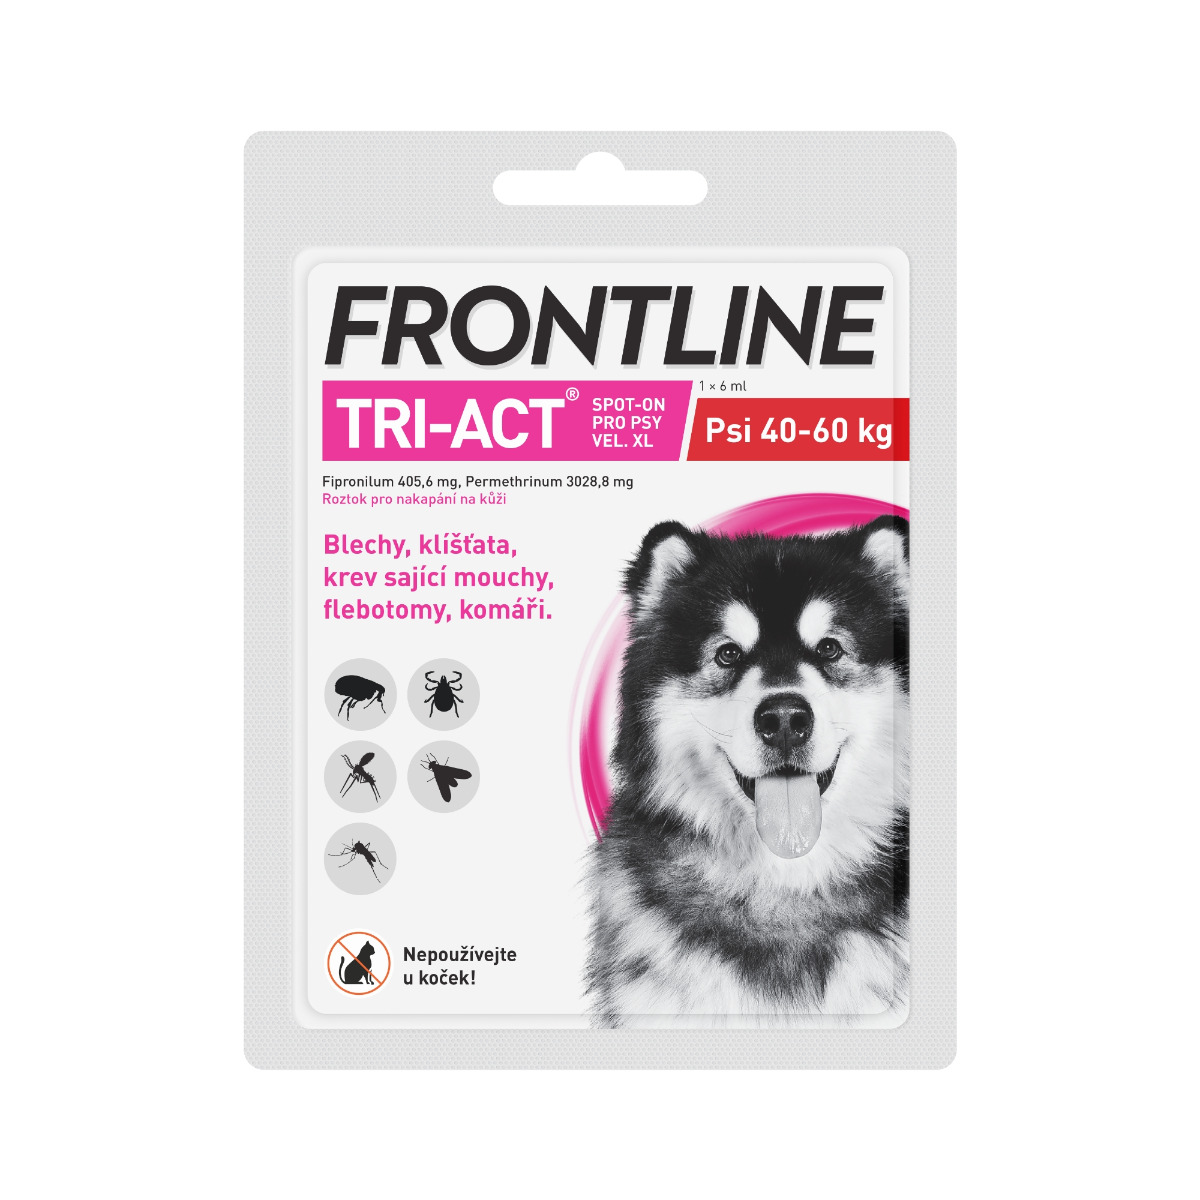 FRONTLINE TRI-ACT pro psy 40-60 kg (XL) 1 pipeta FRONTLINE